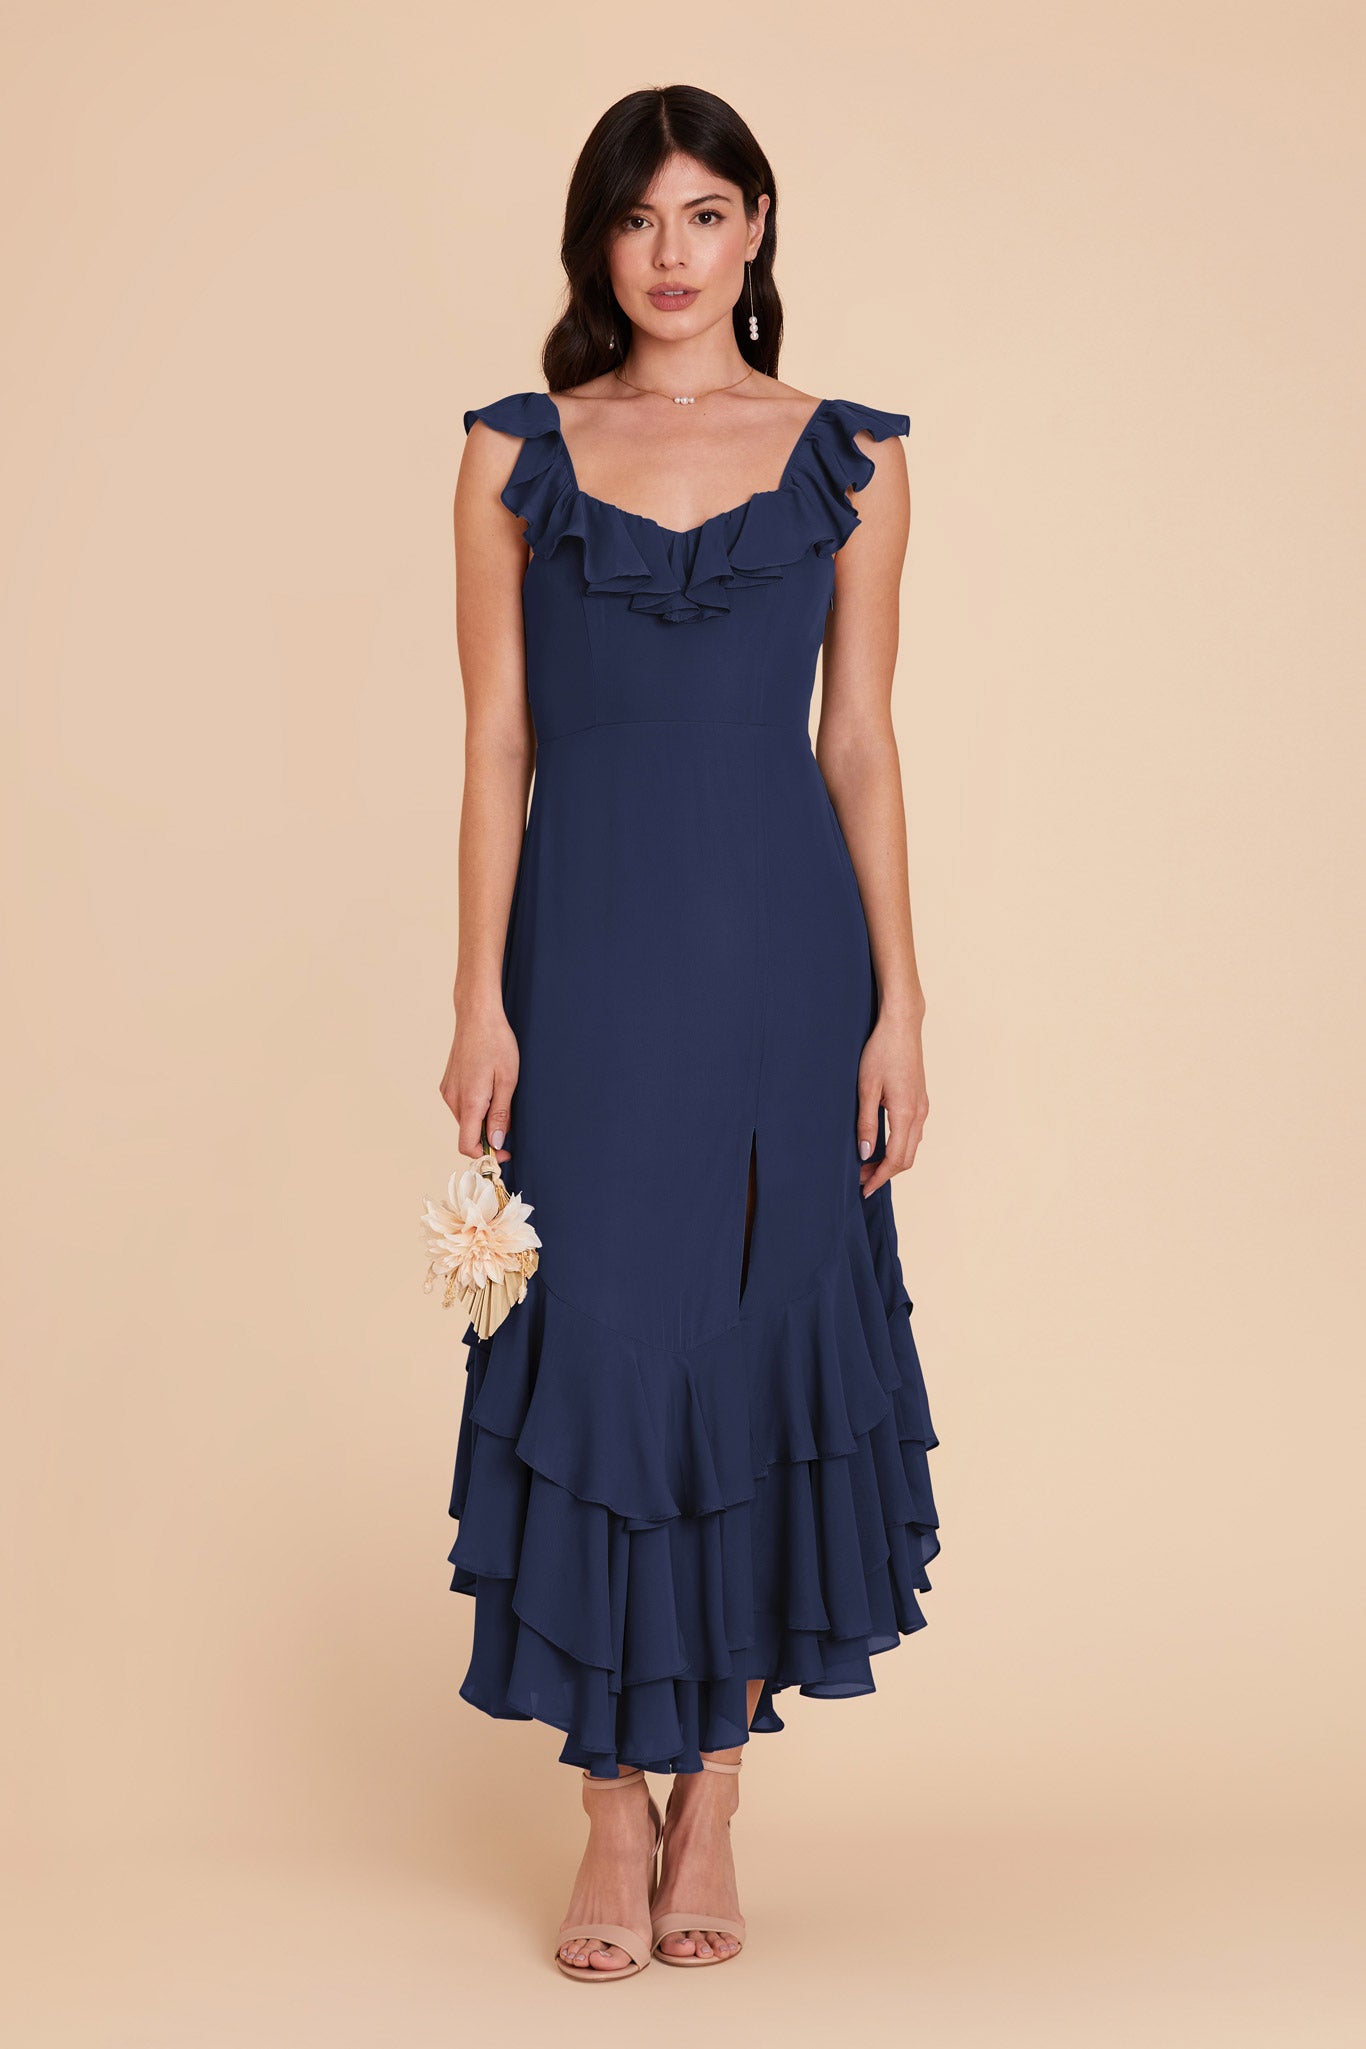 Slate Blue Ginny Chiffon Dress by Birdy Grey